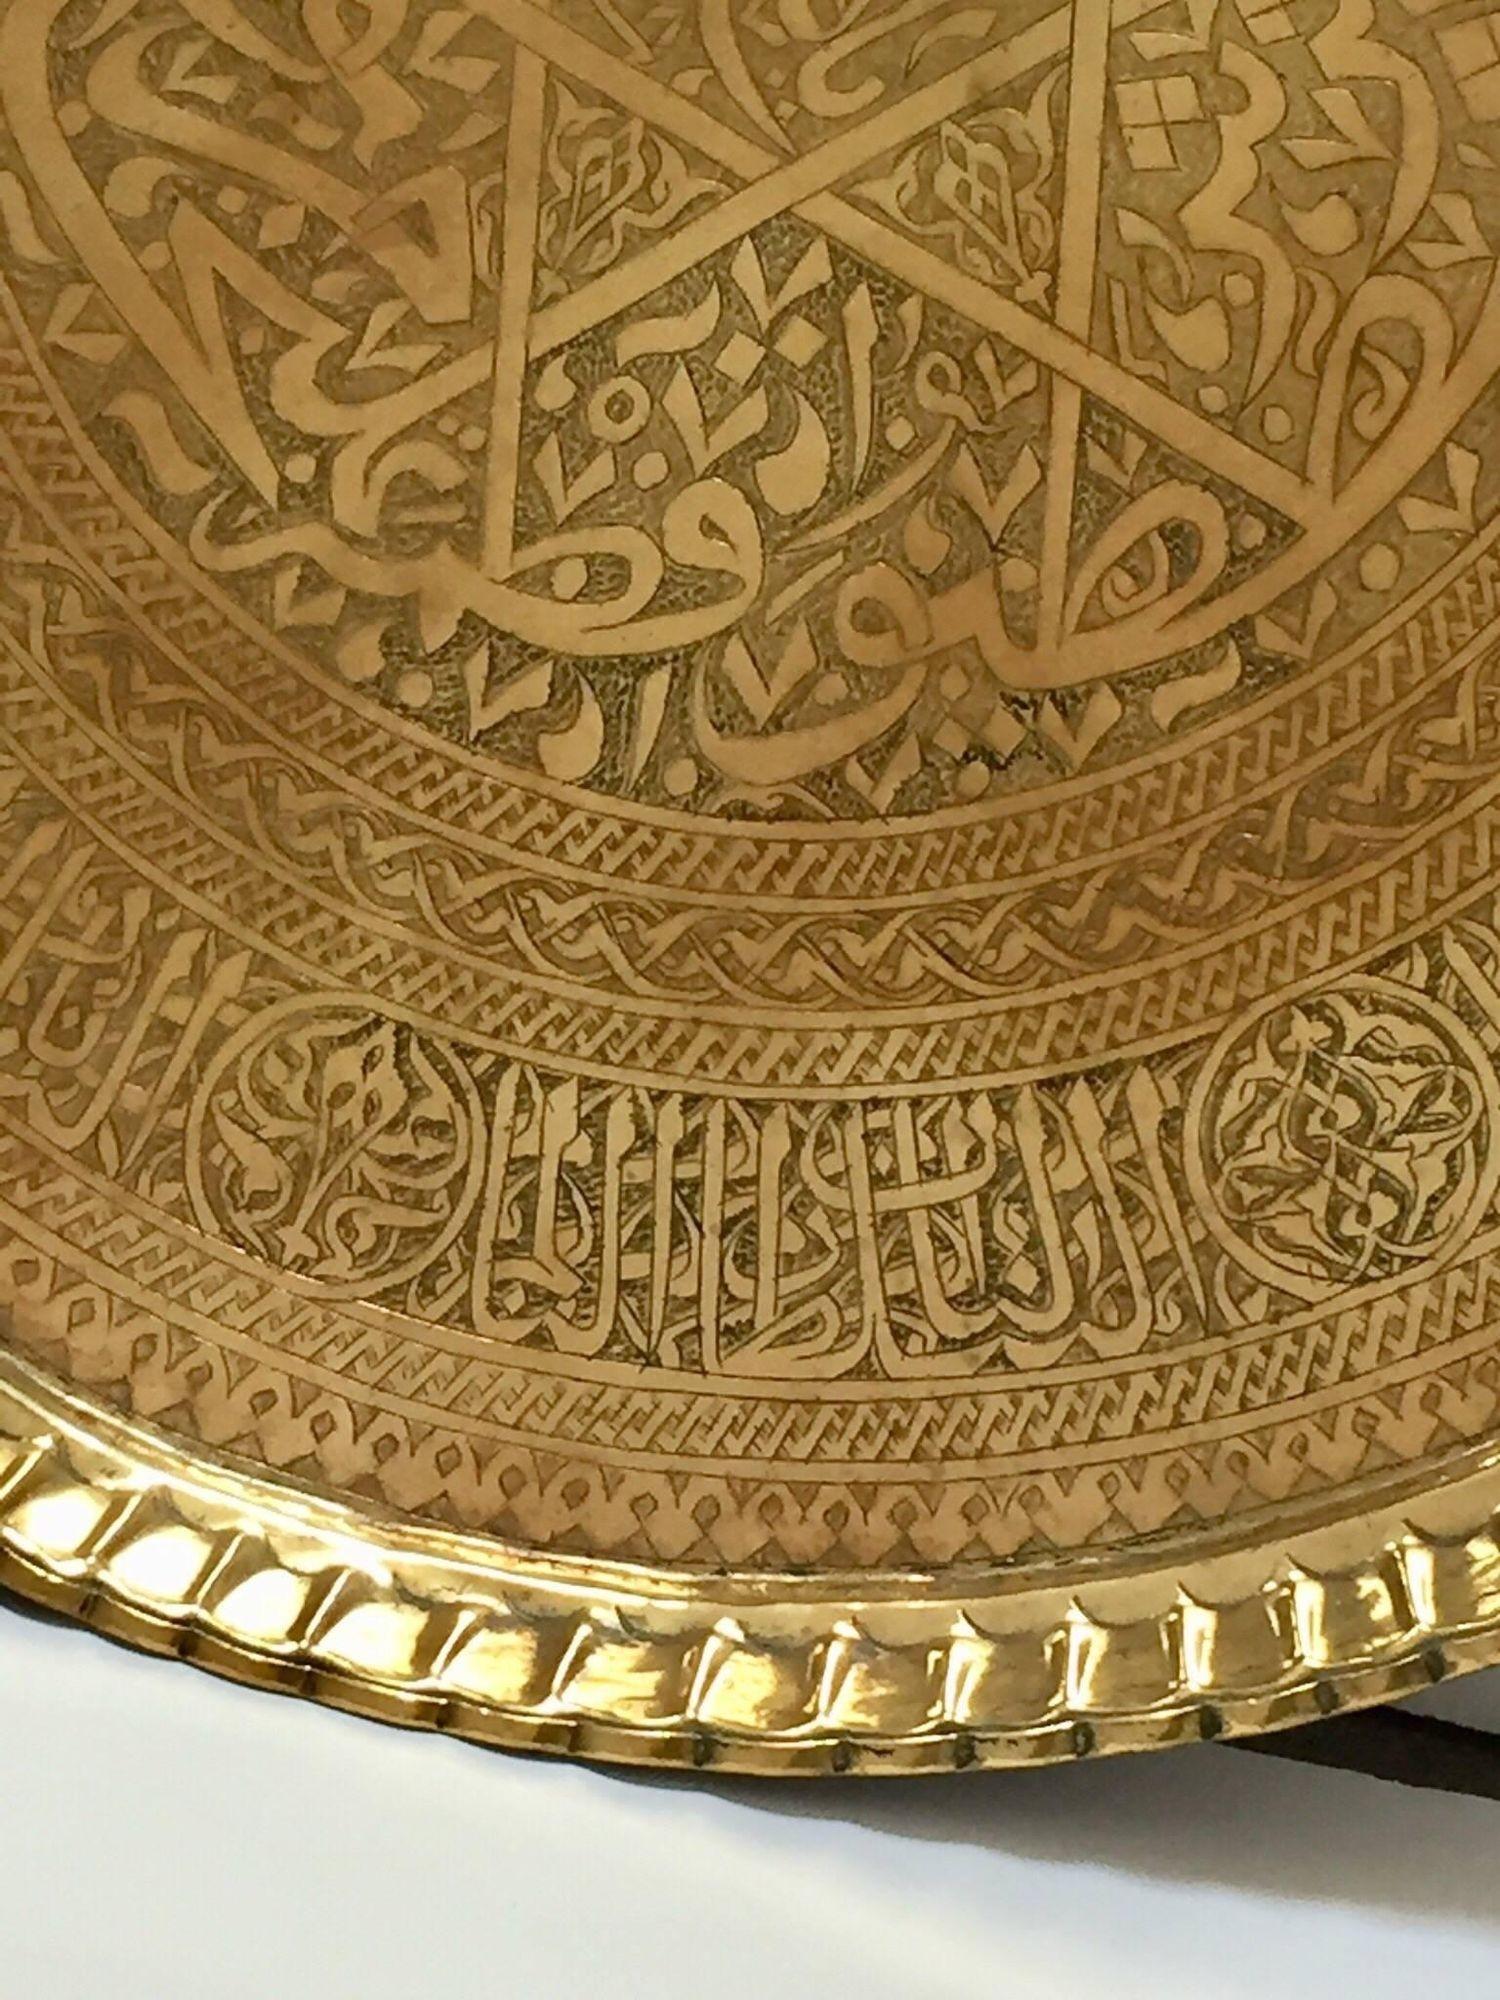 Antique Moorish Brass Tray With Arabic Calligraphy Writing 2